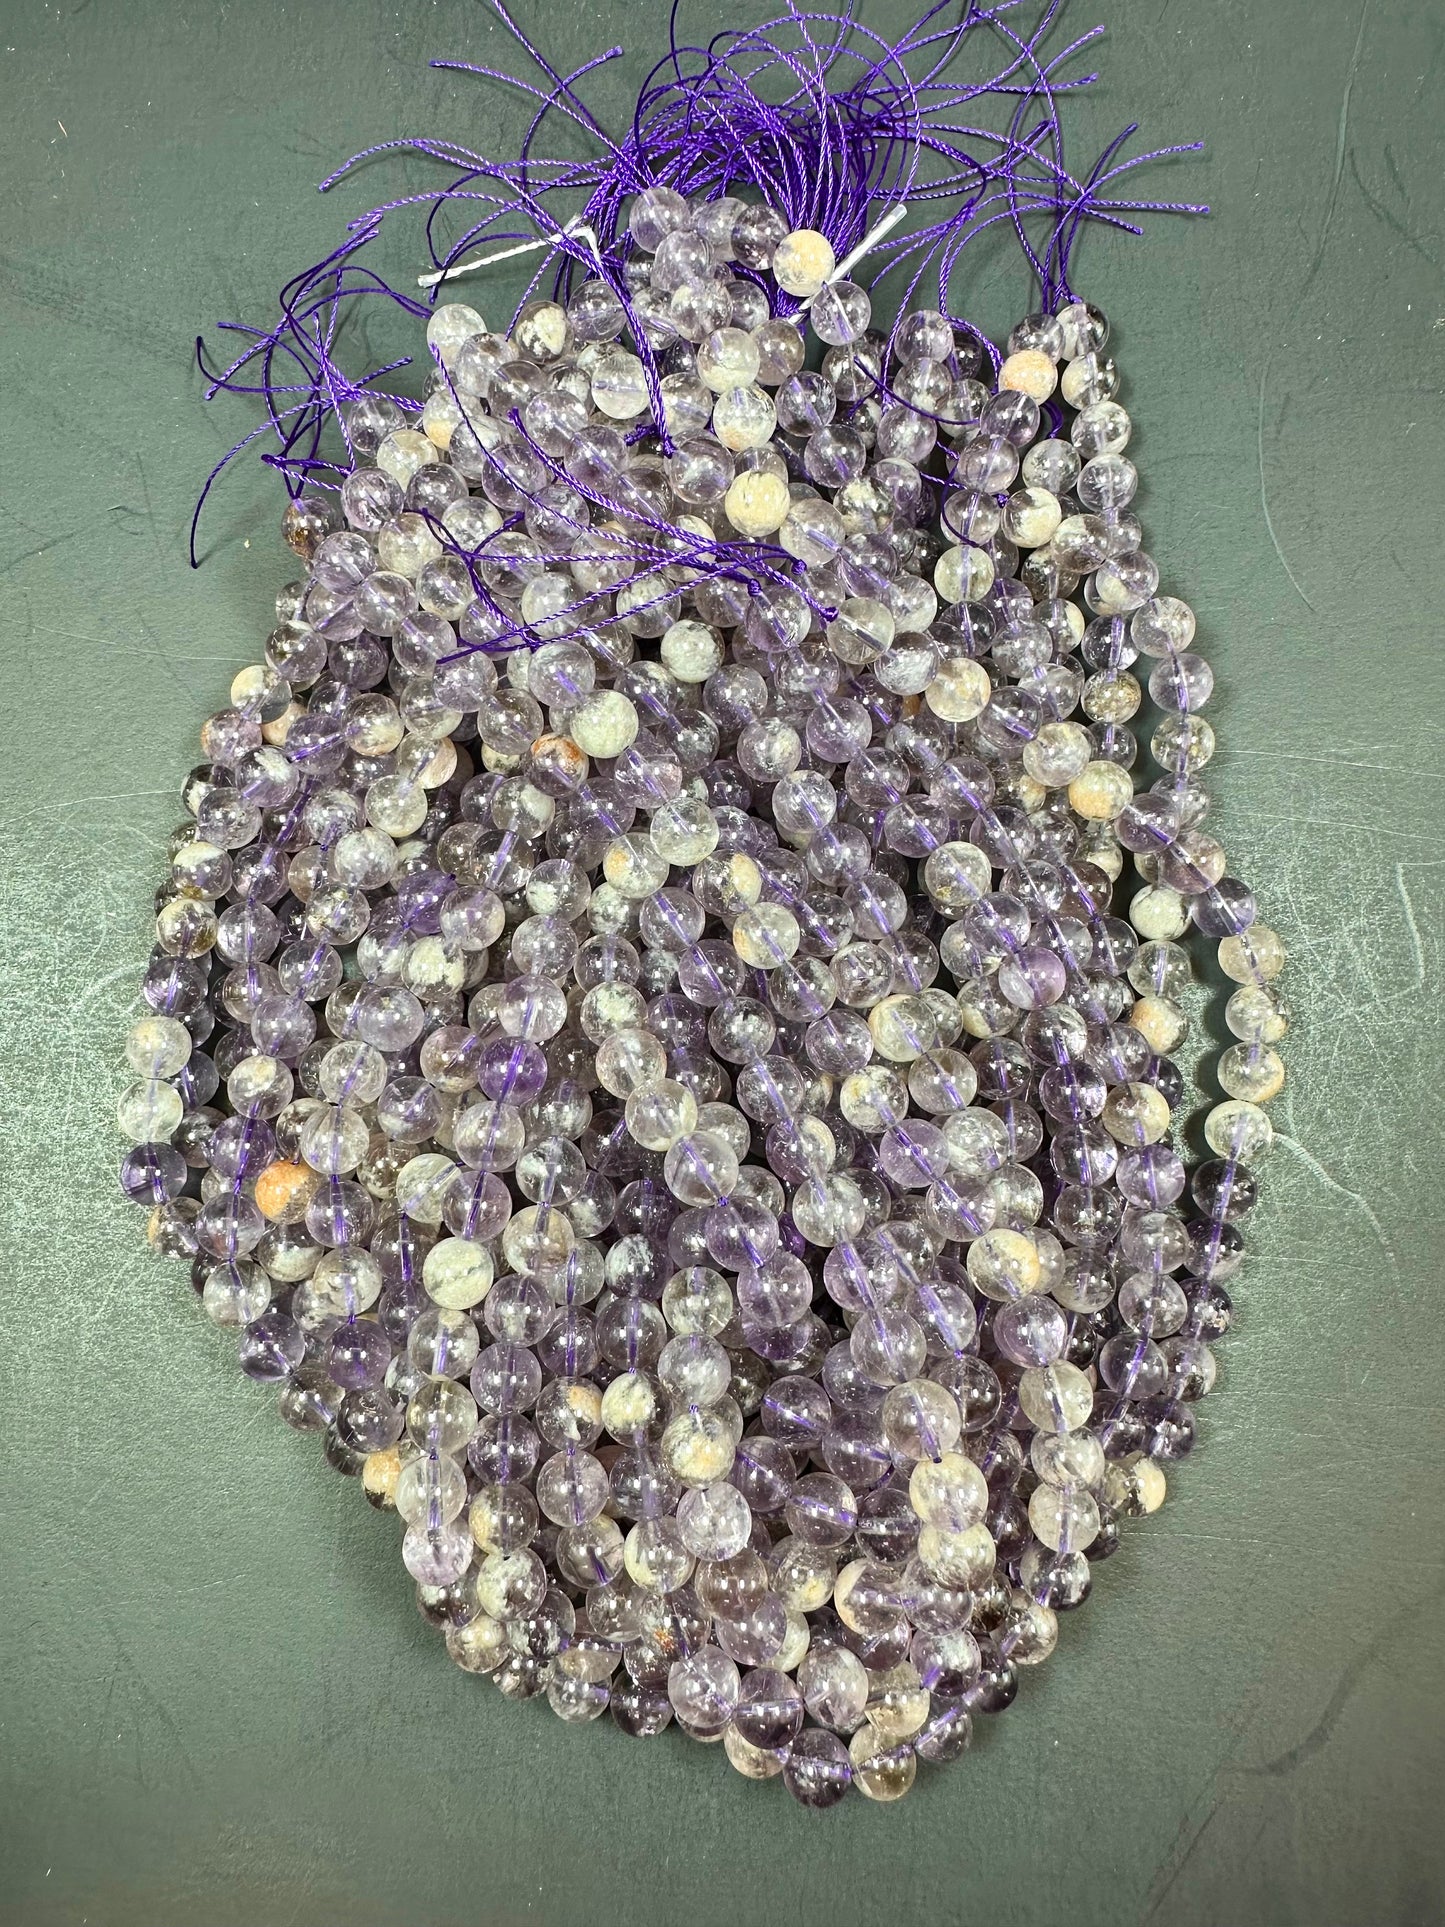 Natural Super 7 Gemstone Bead 6mm 8mm 10mm Round Bead, Beautiful Purple Clear Color Super 7 Gemstone Bead Full Strand 15.5"